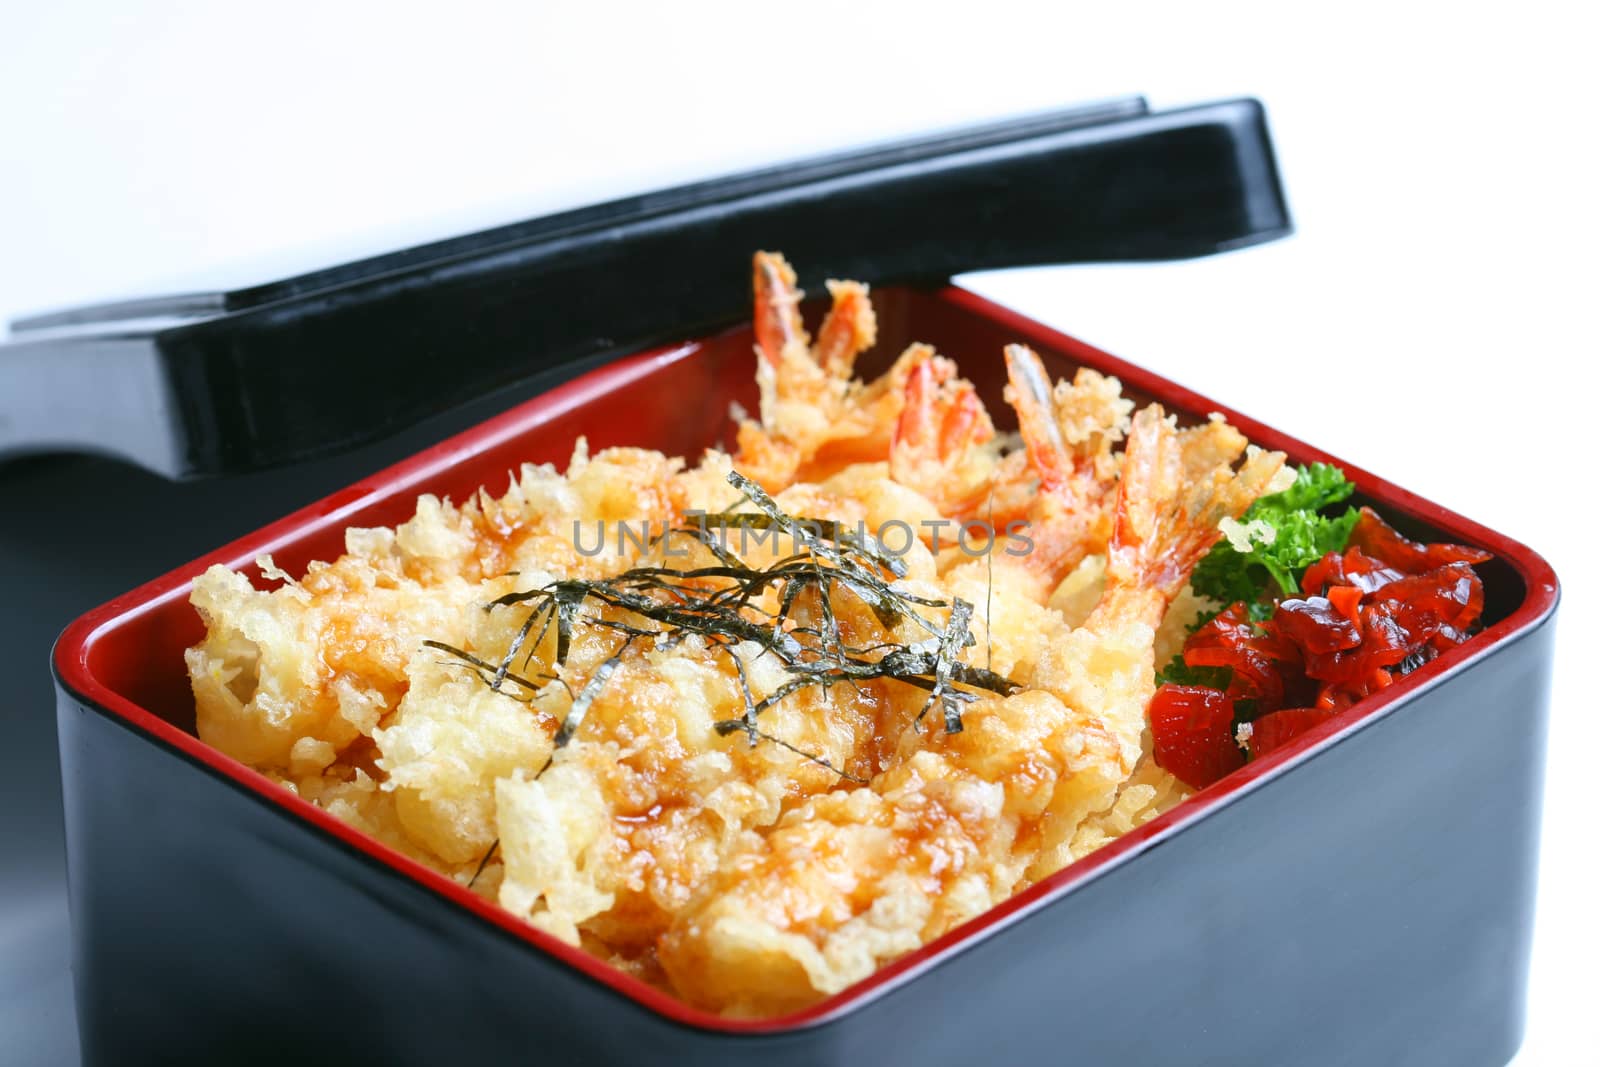 Ebi tempura don or Ebi Kakiage served with red pickled vegetables (Fukujin Zuke) in white background by Mercedess